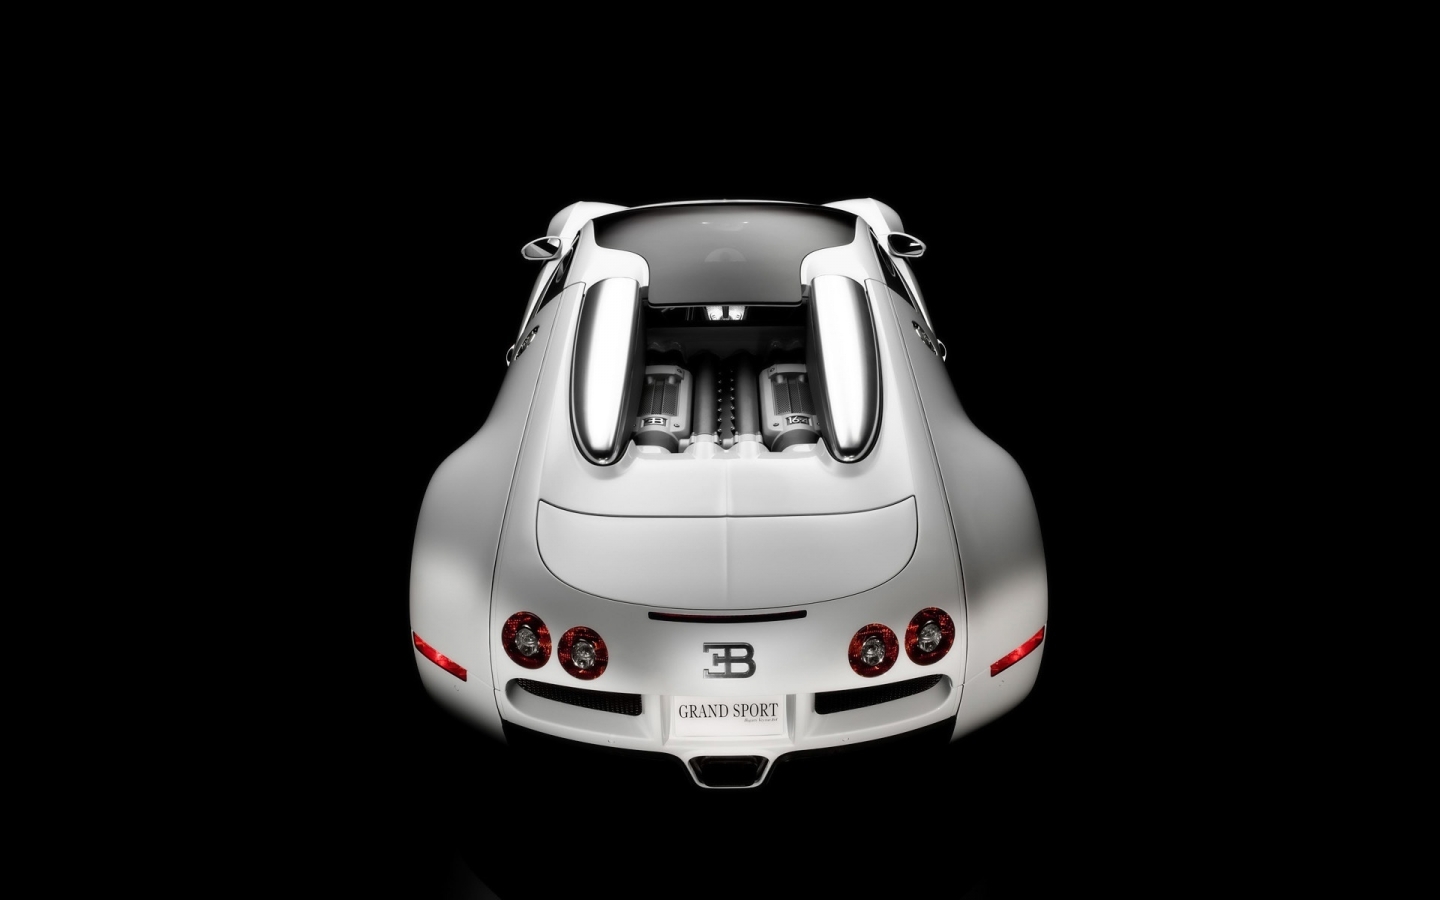 Bugatti Veyron 16.4 Grand Sport Production Version 2009 - Studio Rear Top for 1440 x 900 widescreen resolution